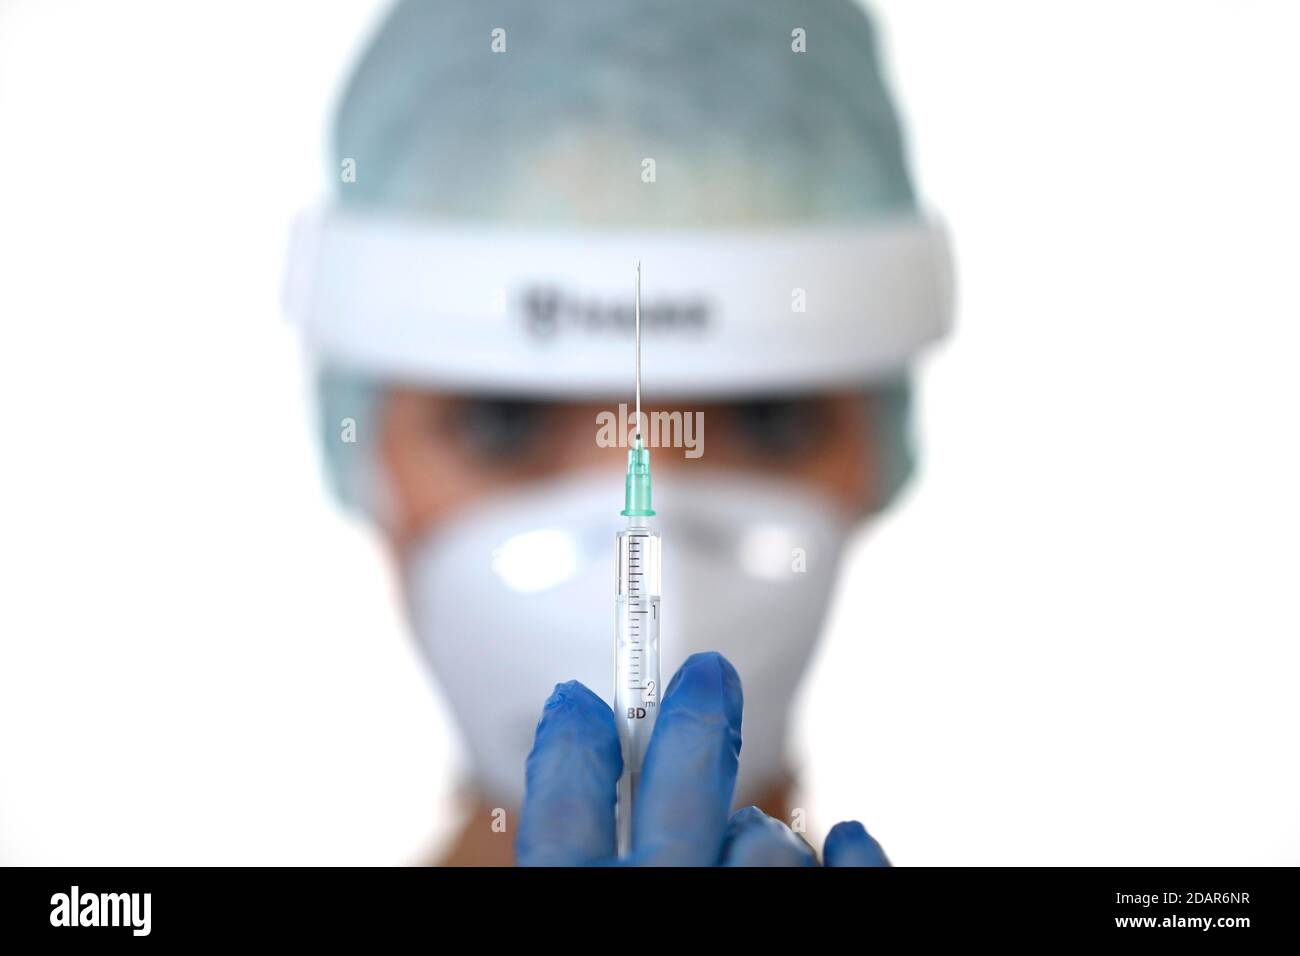 Image symbole vaccin Corona, médecin avec seringue, crise corona, Bade-Wurtemberg, Allemagne Banque D'Images